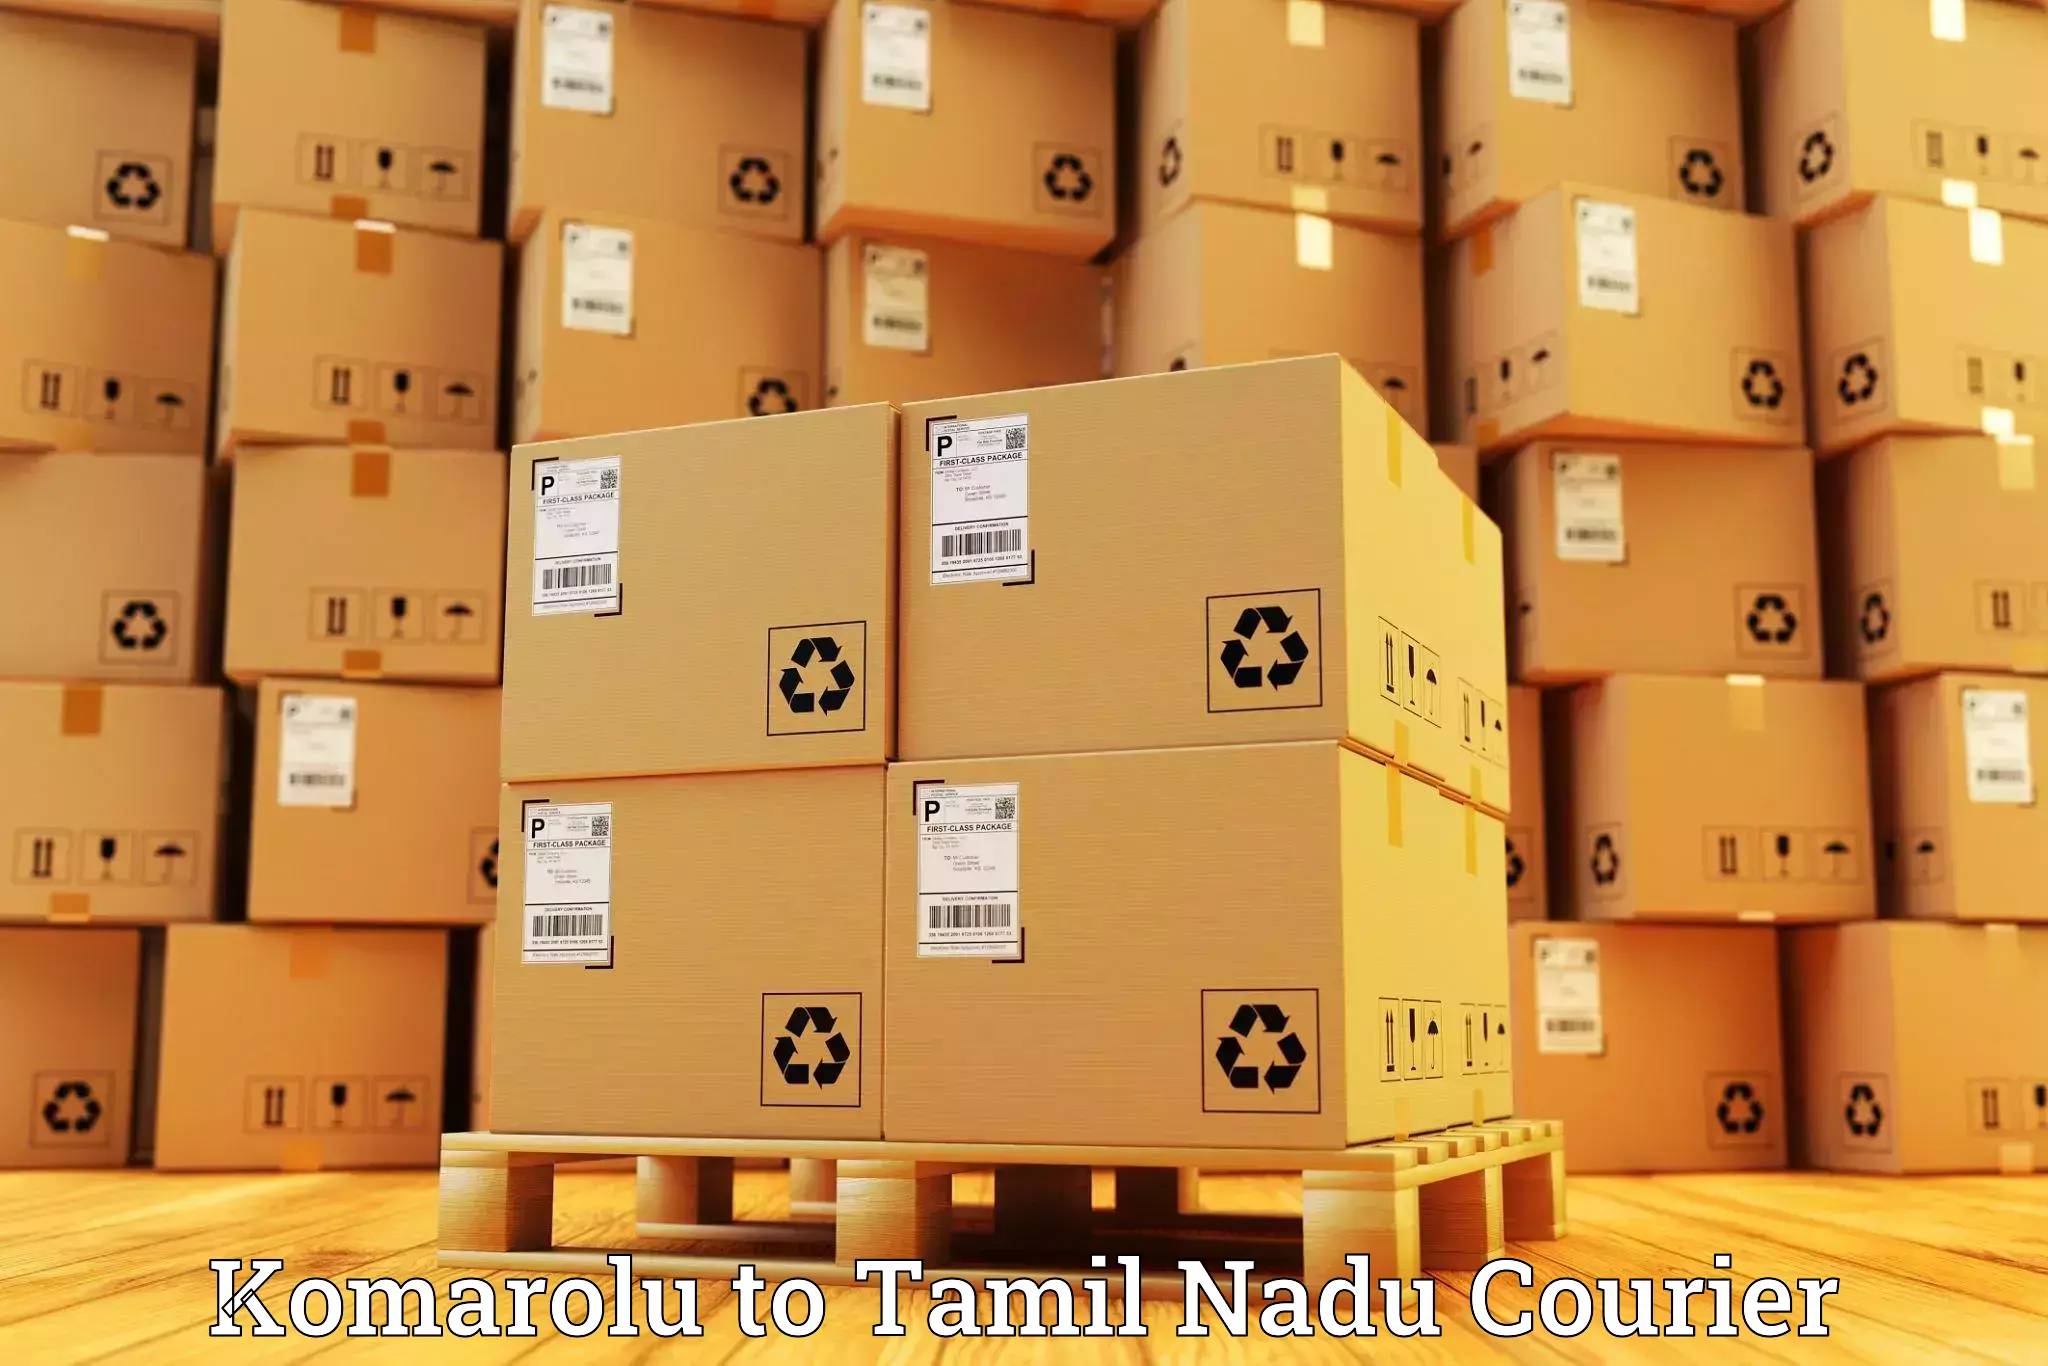 Courier service comparison Komarolu to Tamil Nadu Veterinary and Animal Sciences University Chennai